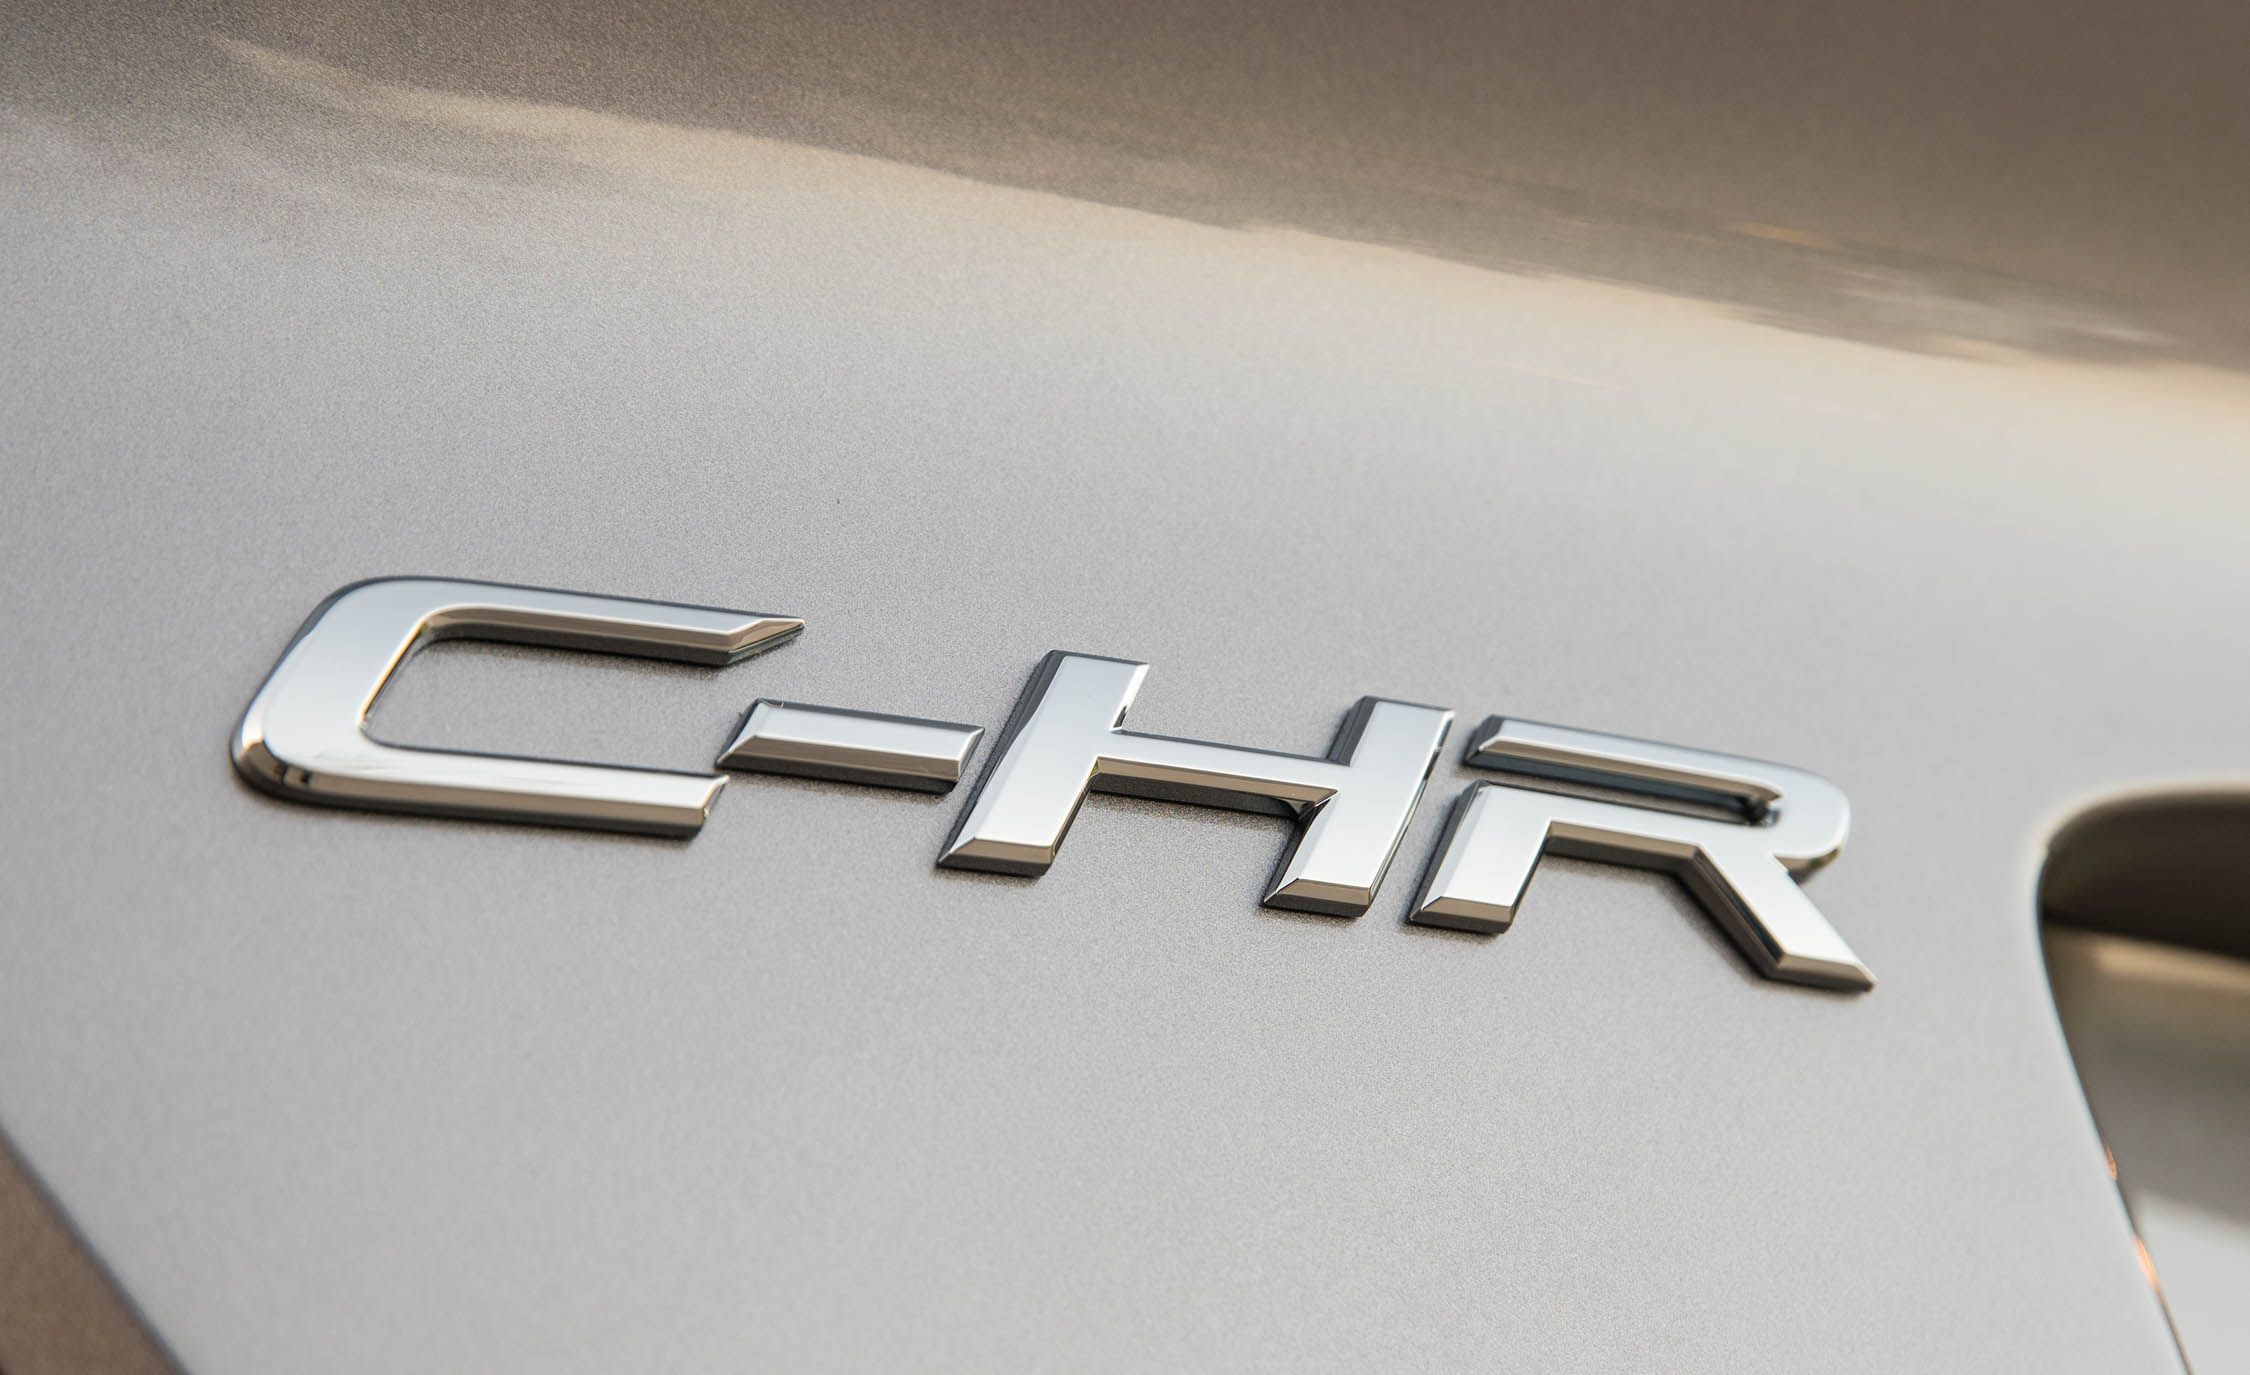 2018 Toyota C Hr Silver Metallic Exterior View Rear Emblem (View 22 of 33)